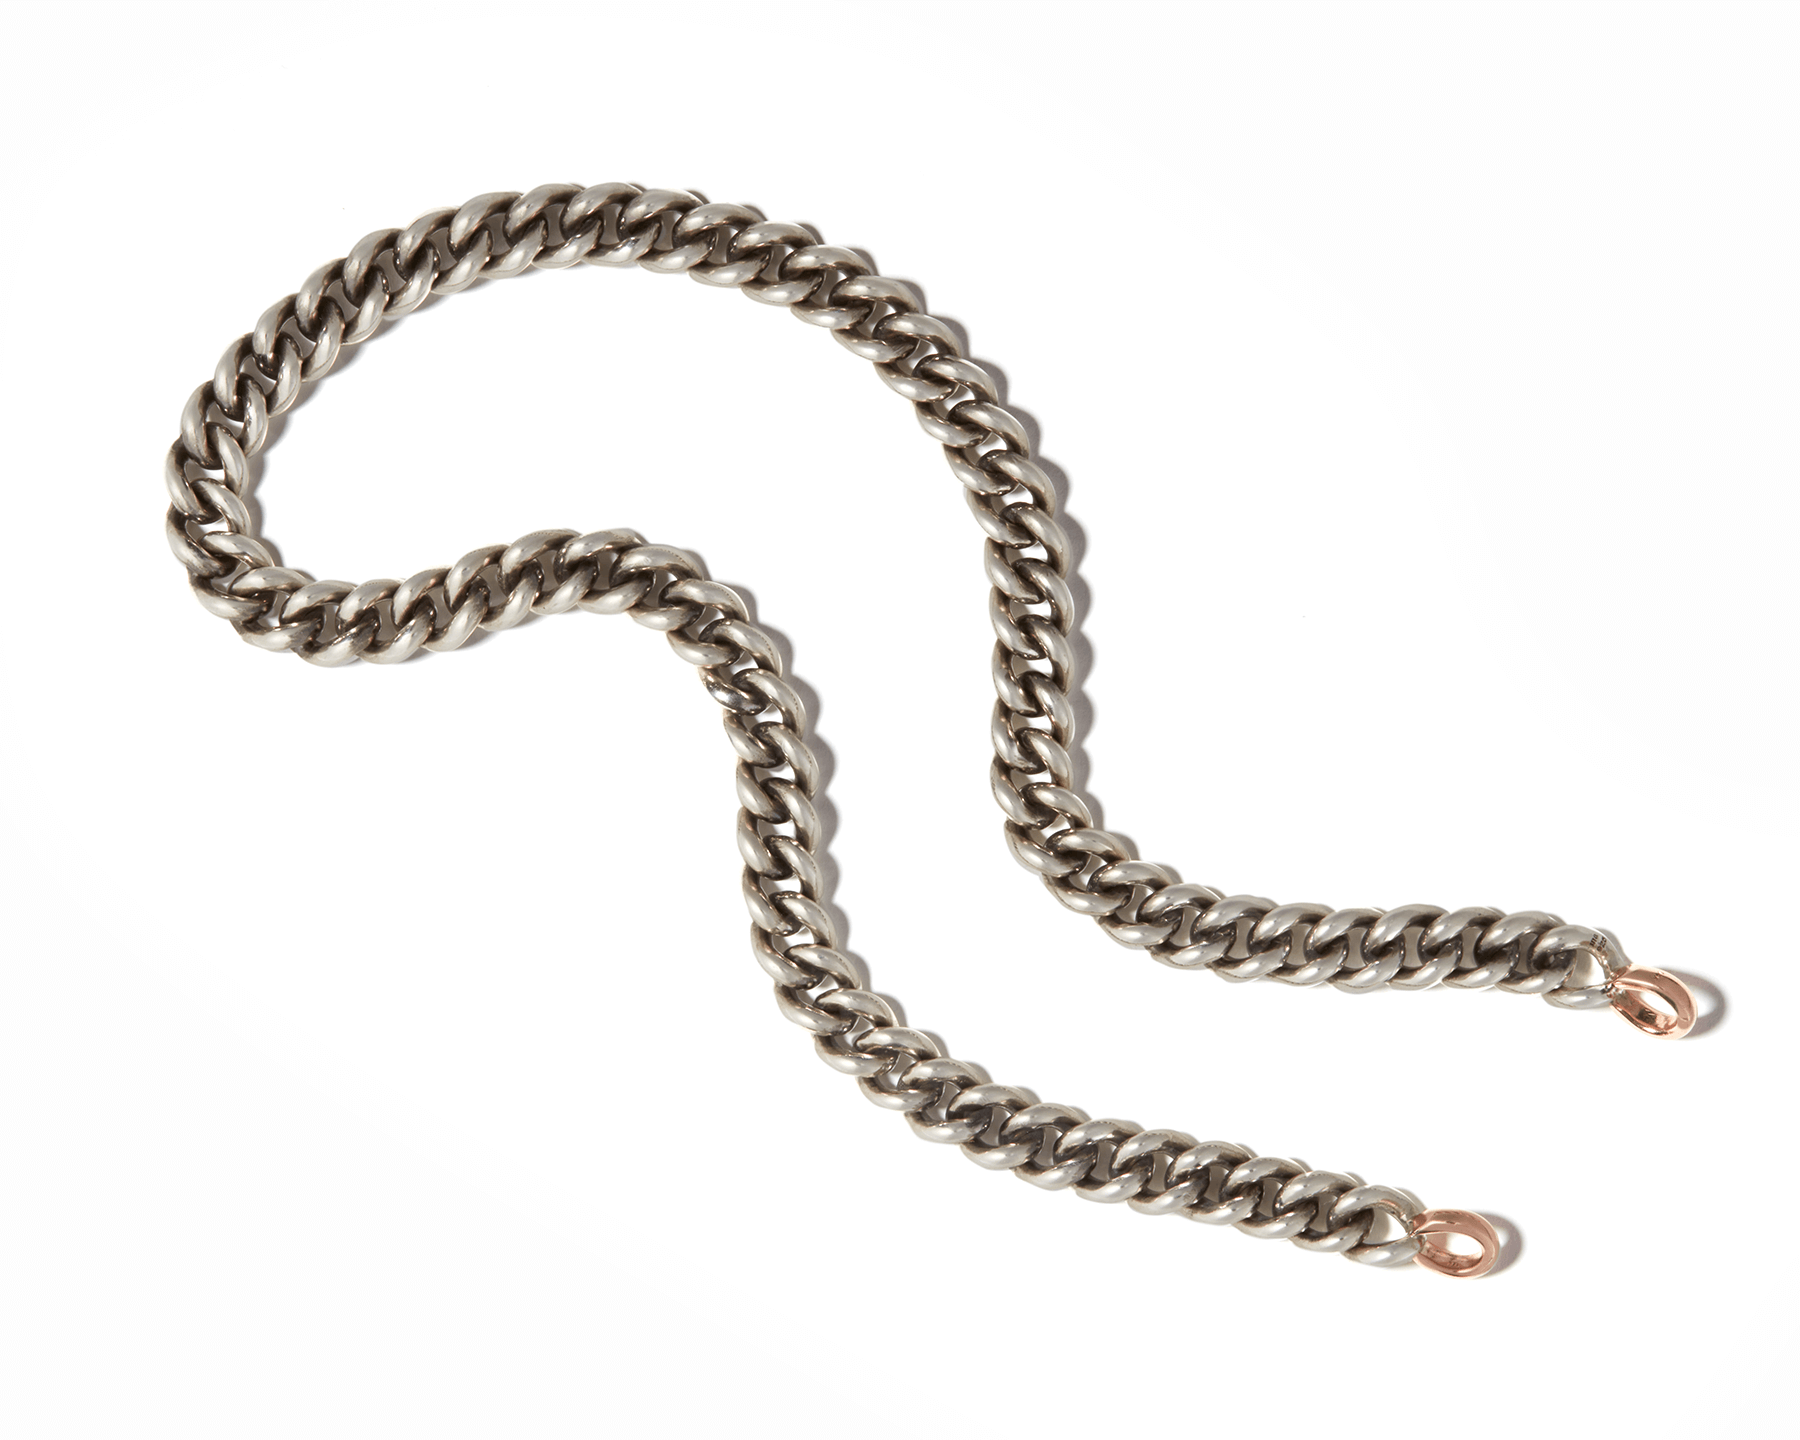 MiniMEGA Small Curb Chain Necklace